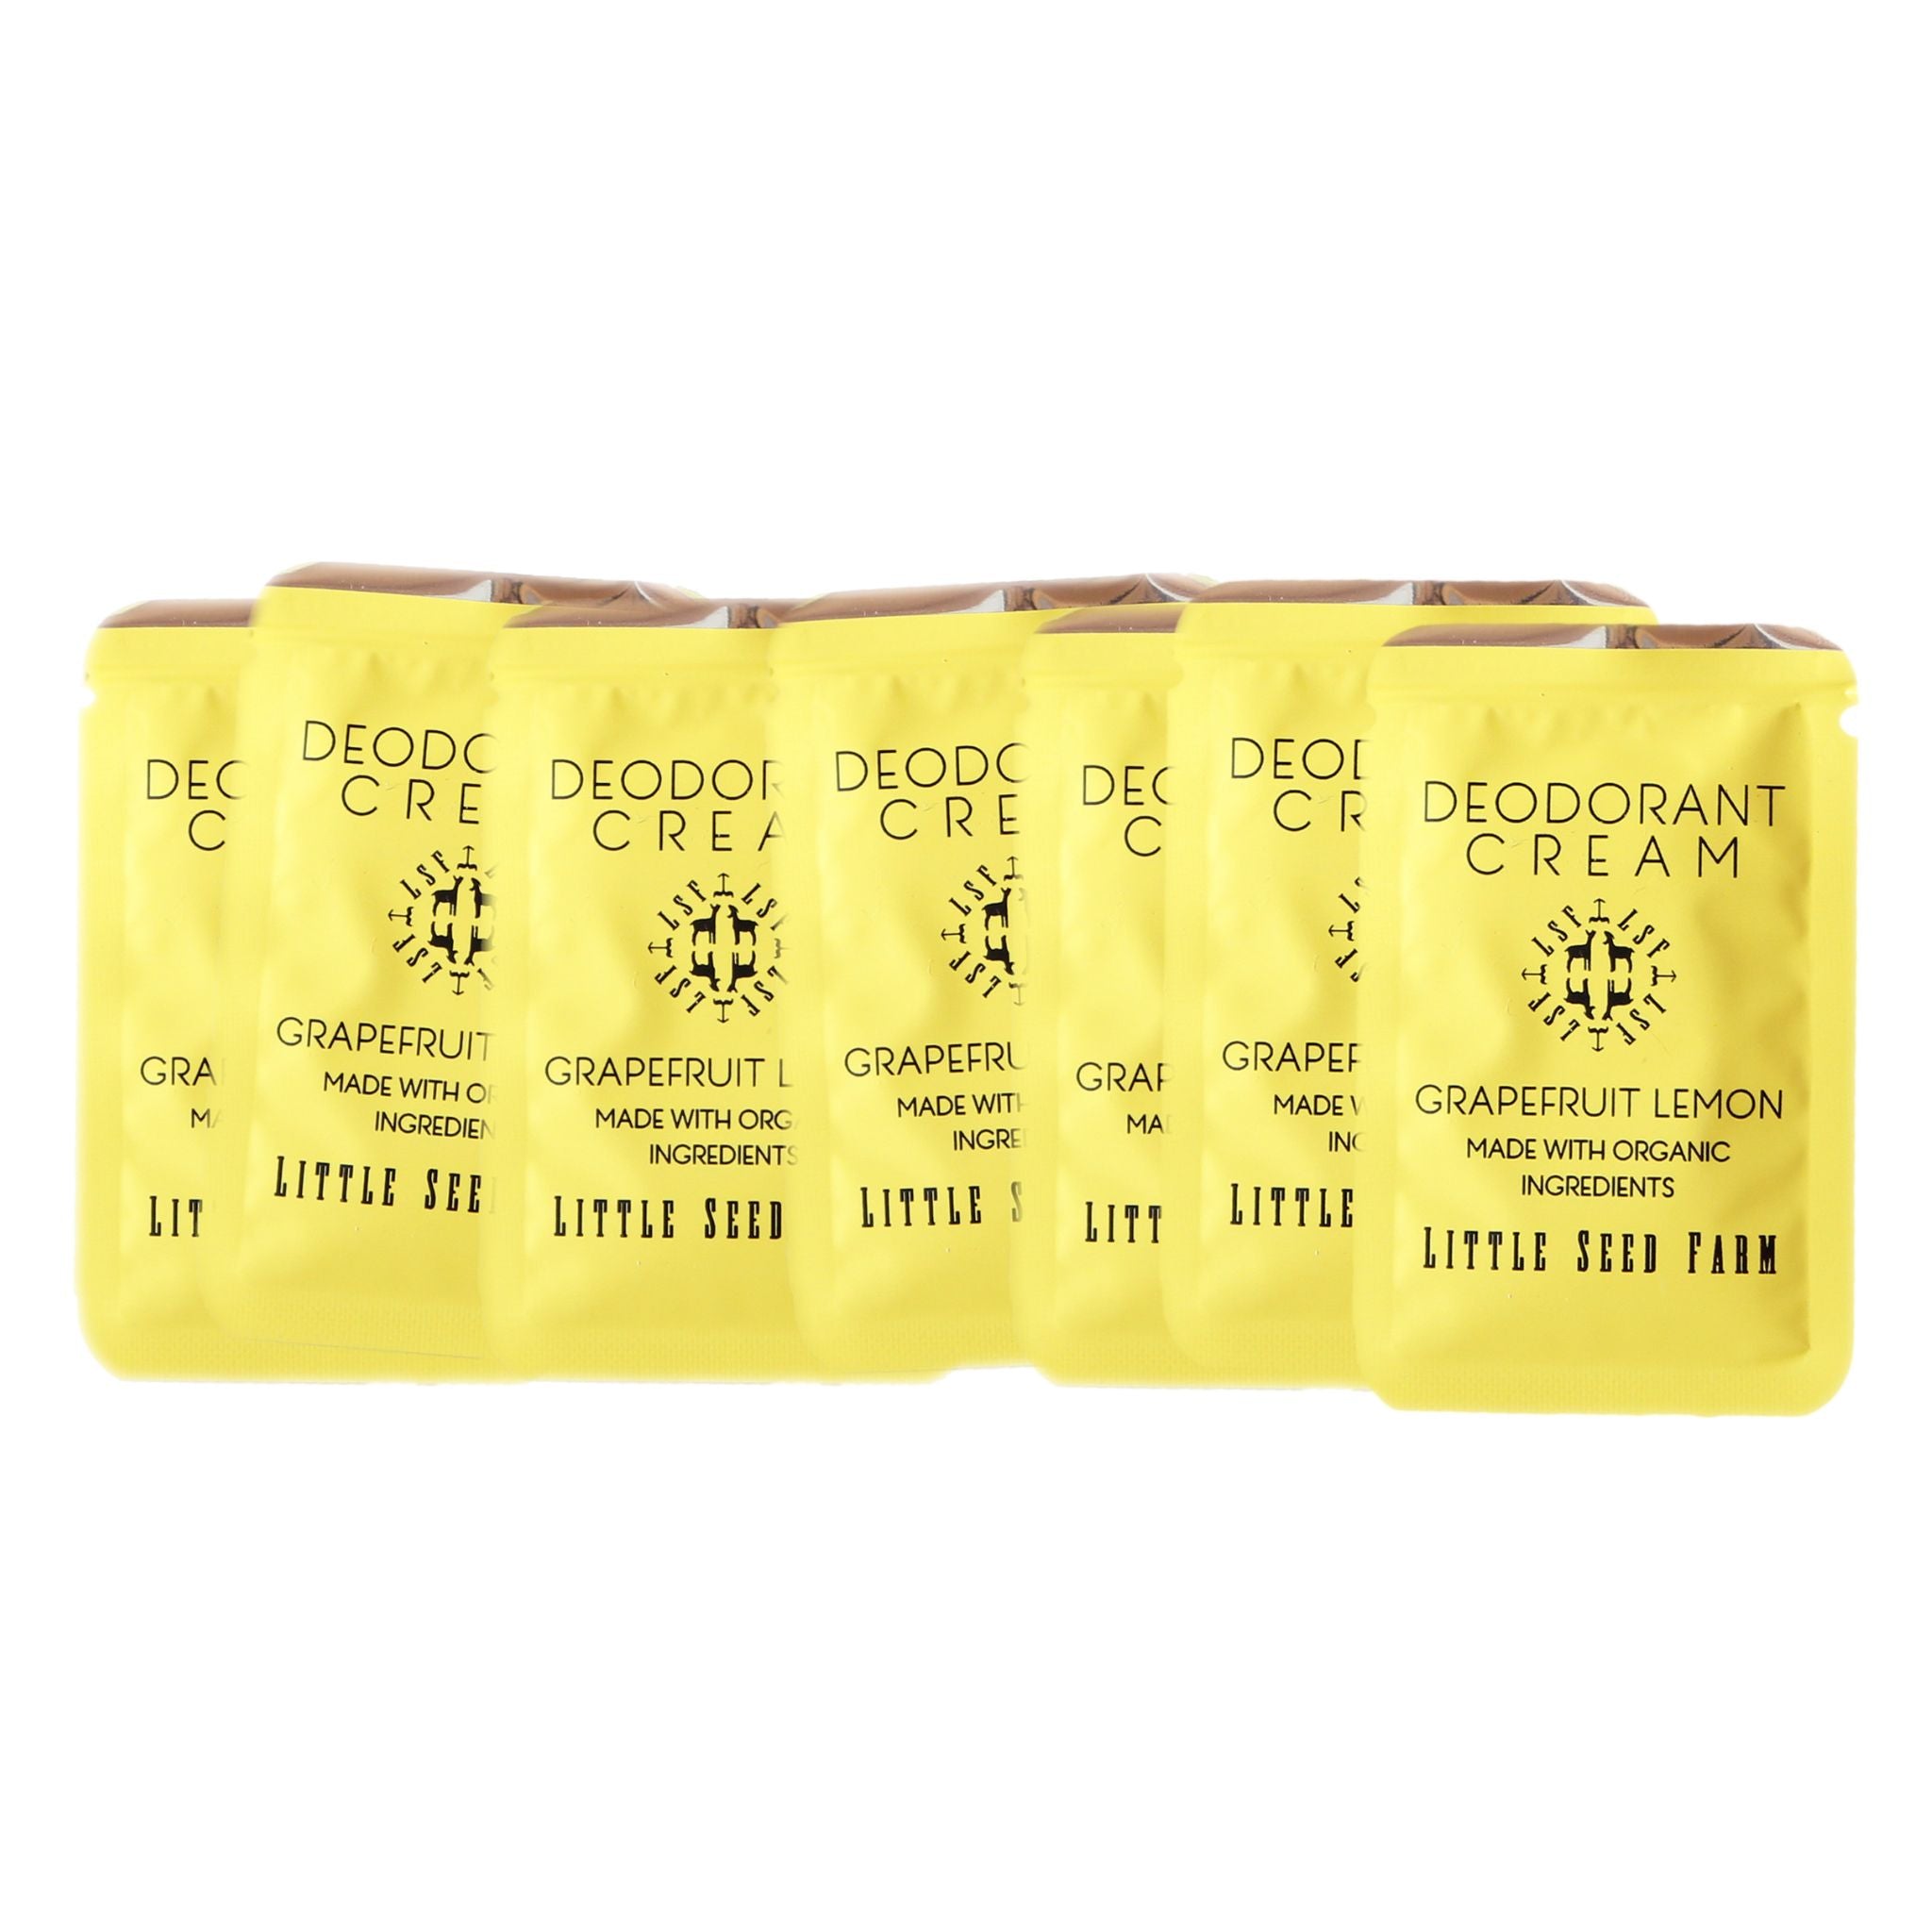 Travel Pack - Nine Organic Deodorant Cream Pouches